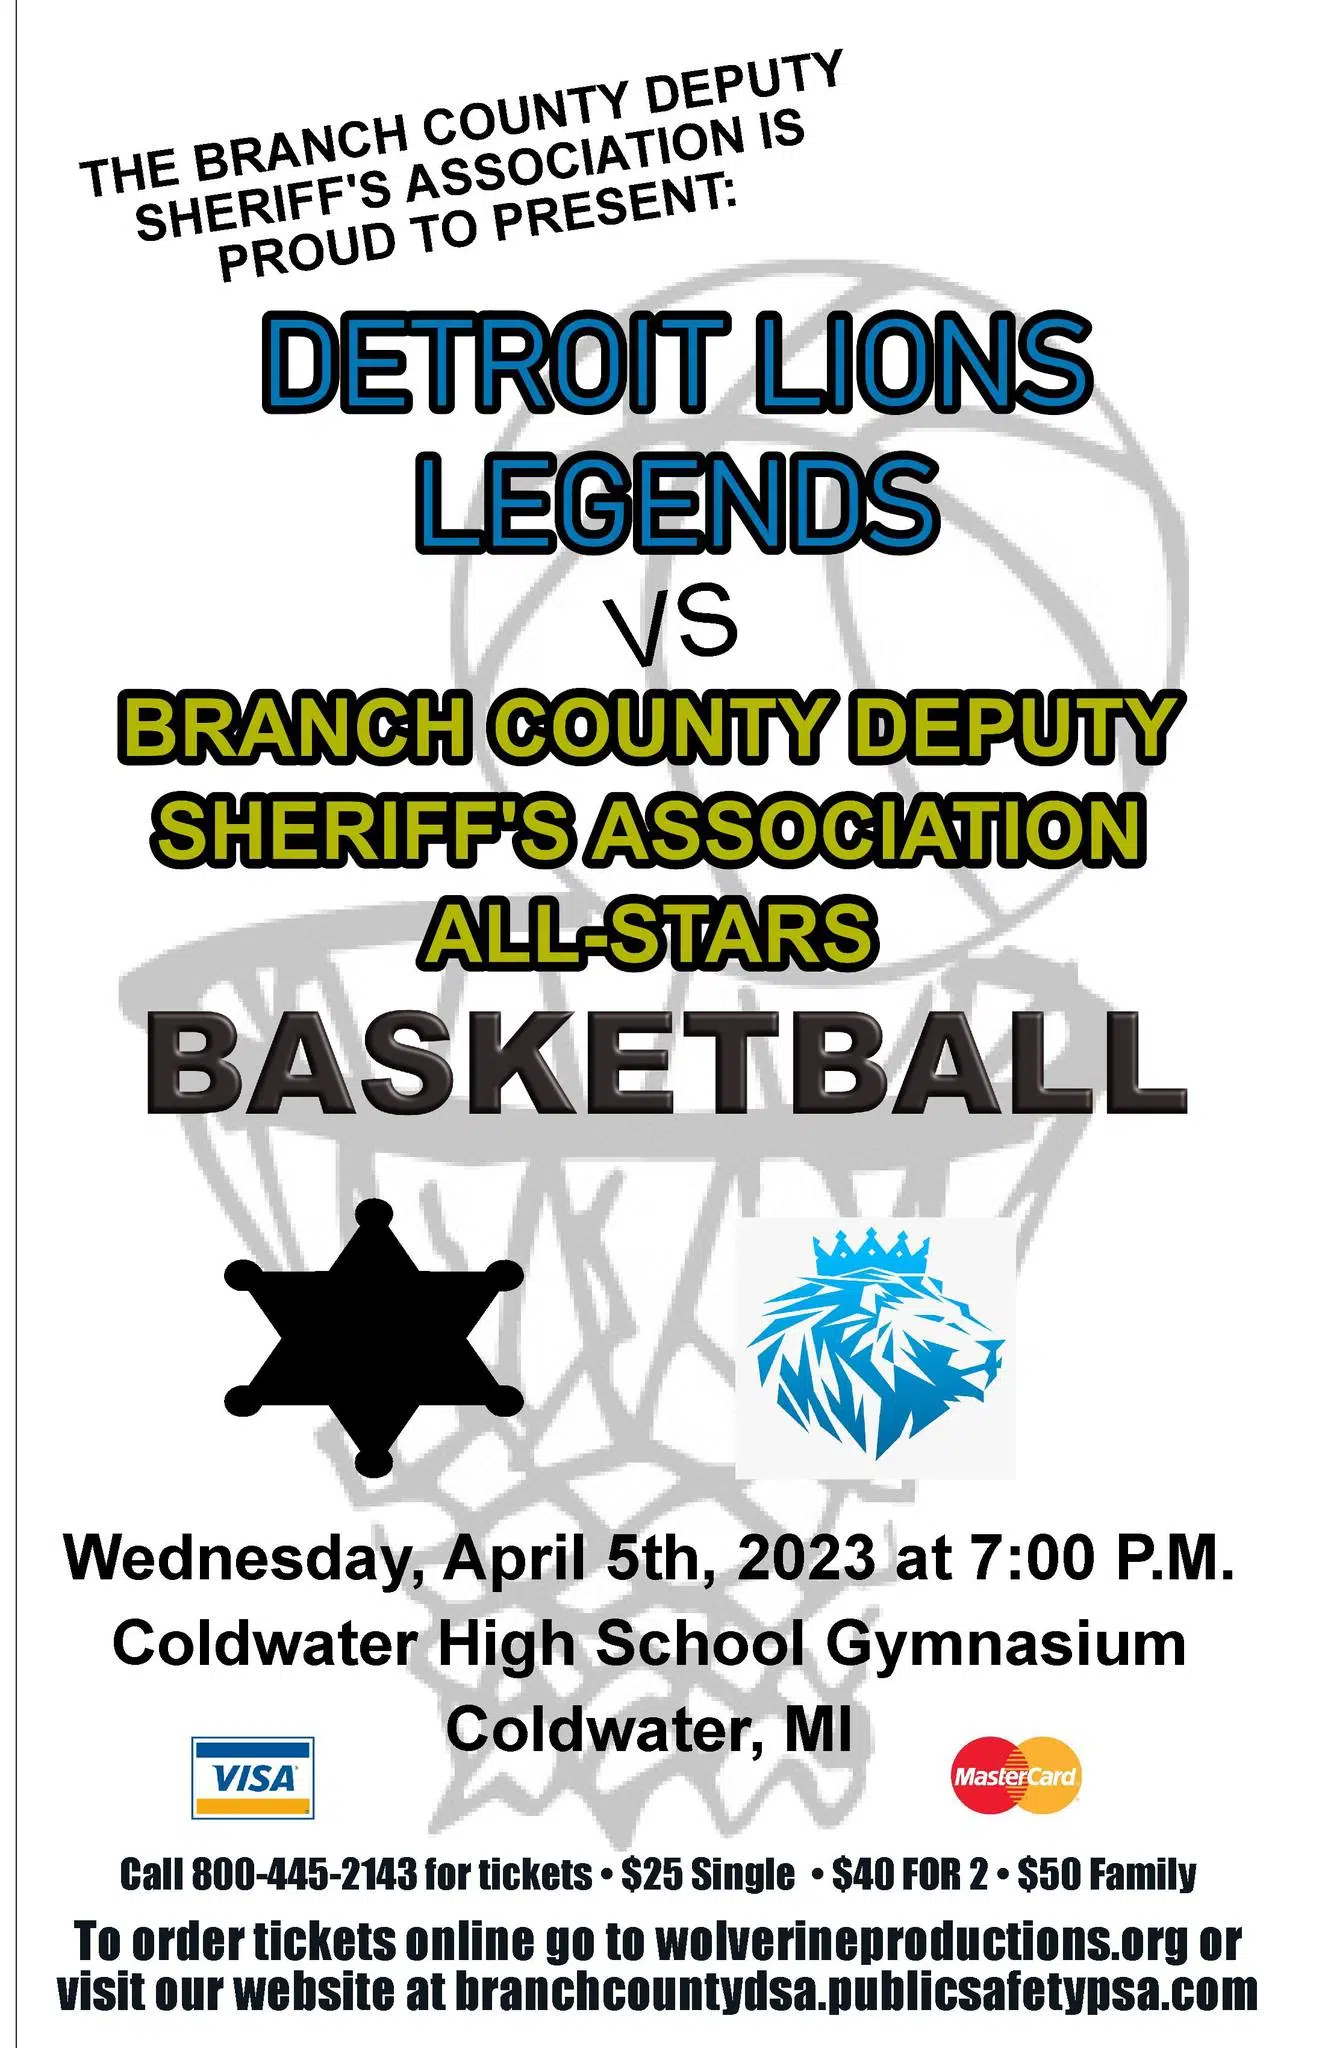 Branch County Deputy Sheriff's Association vs. Lions Legend All